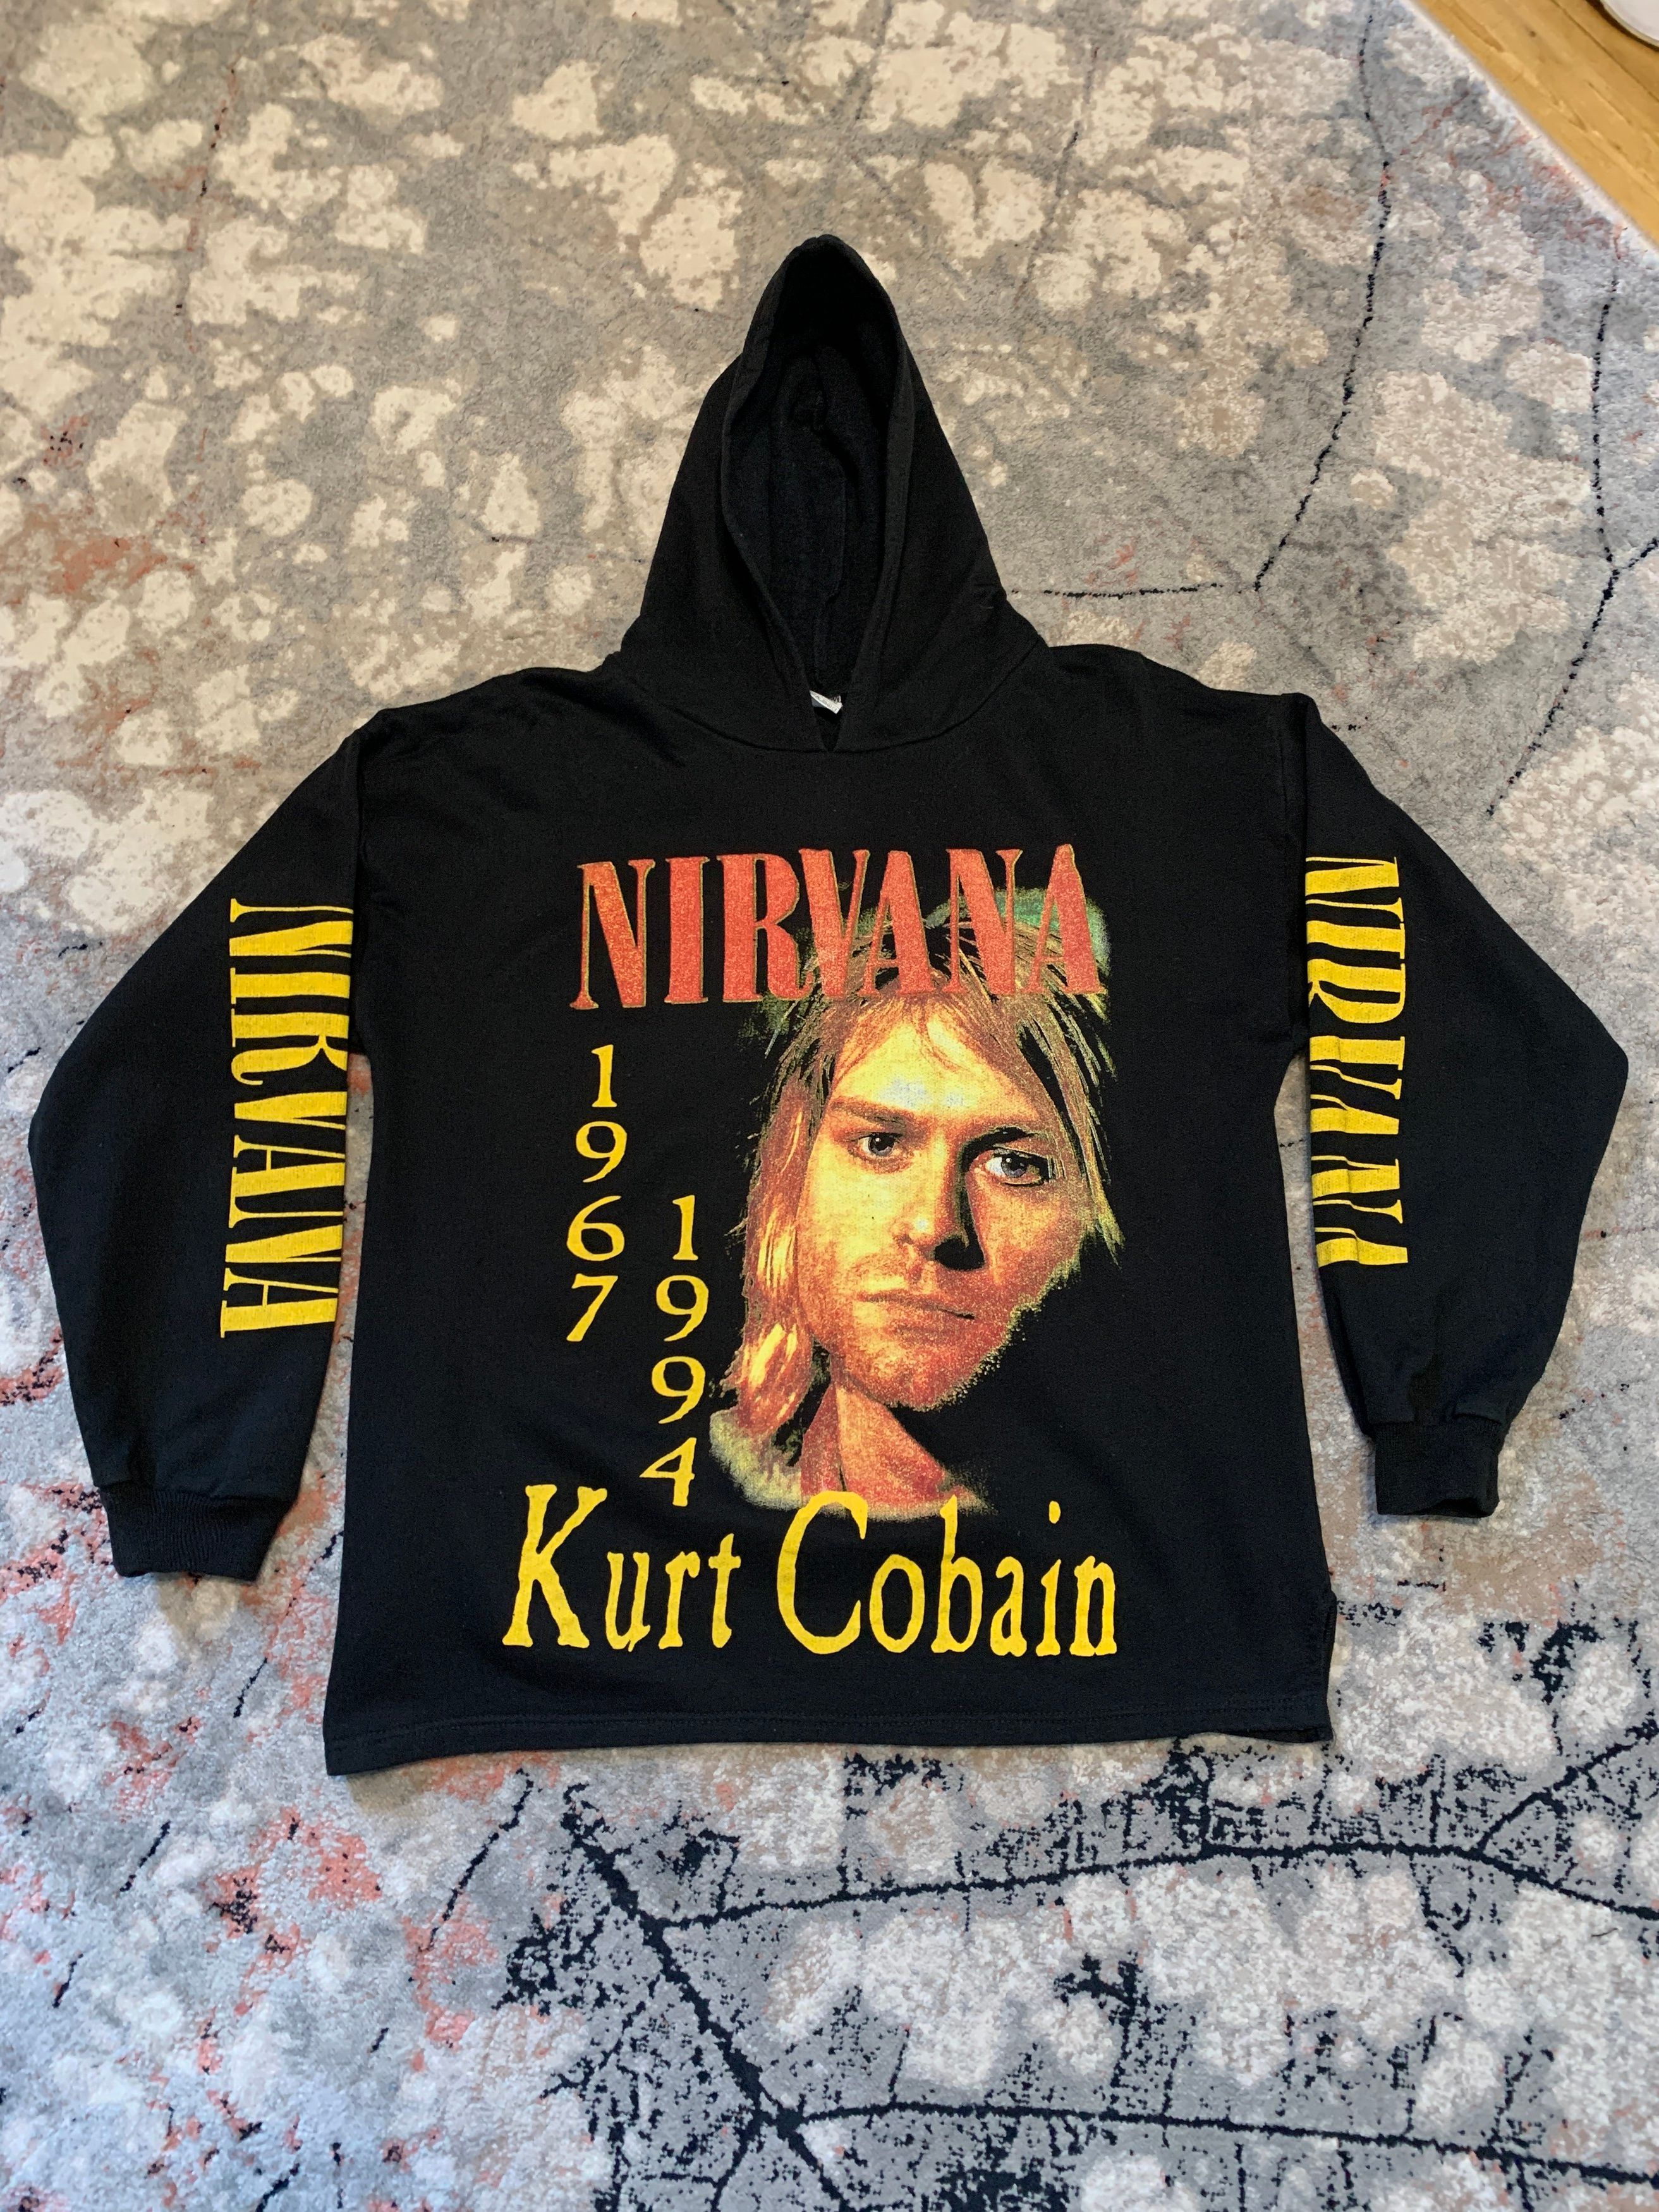 Vintage Nirvana Kurt Cobain 1967-1994 Vintage Bootleg Hoodie Size US S / EU 44-46 / 1 - 2 Preview